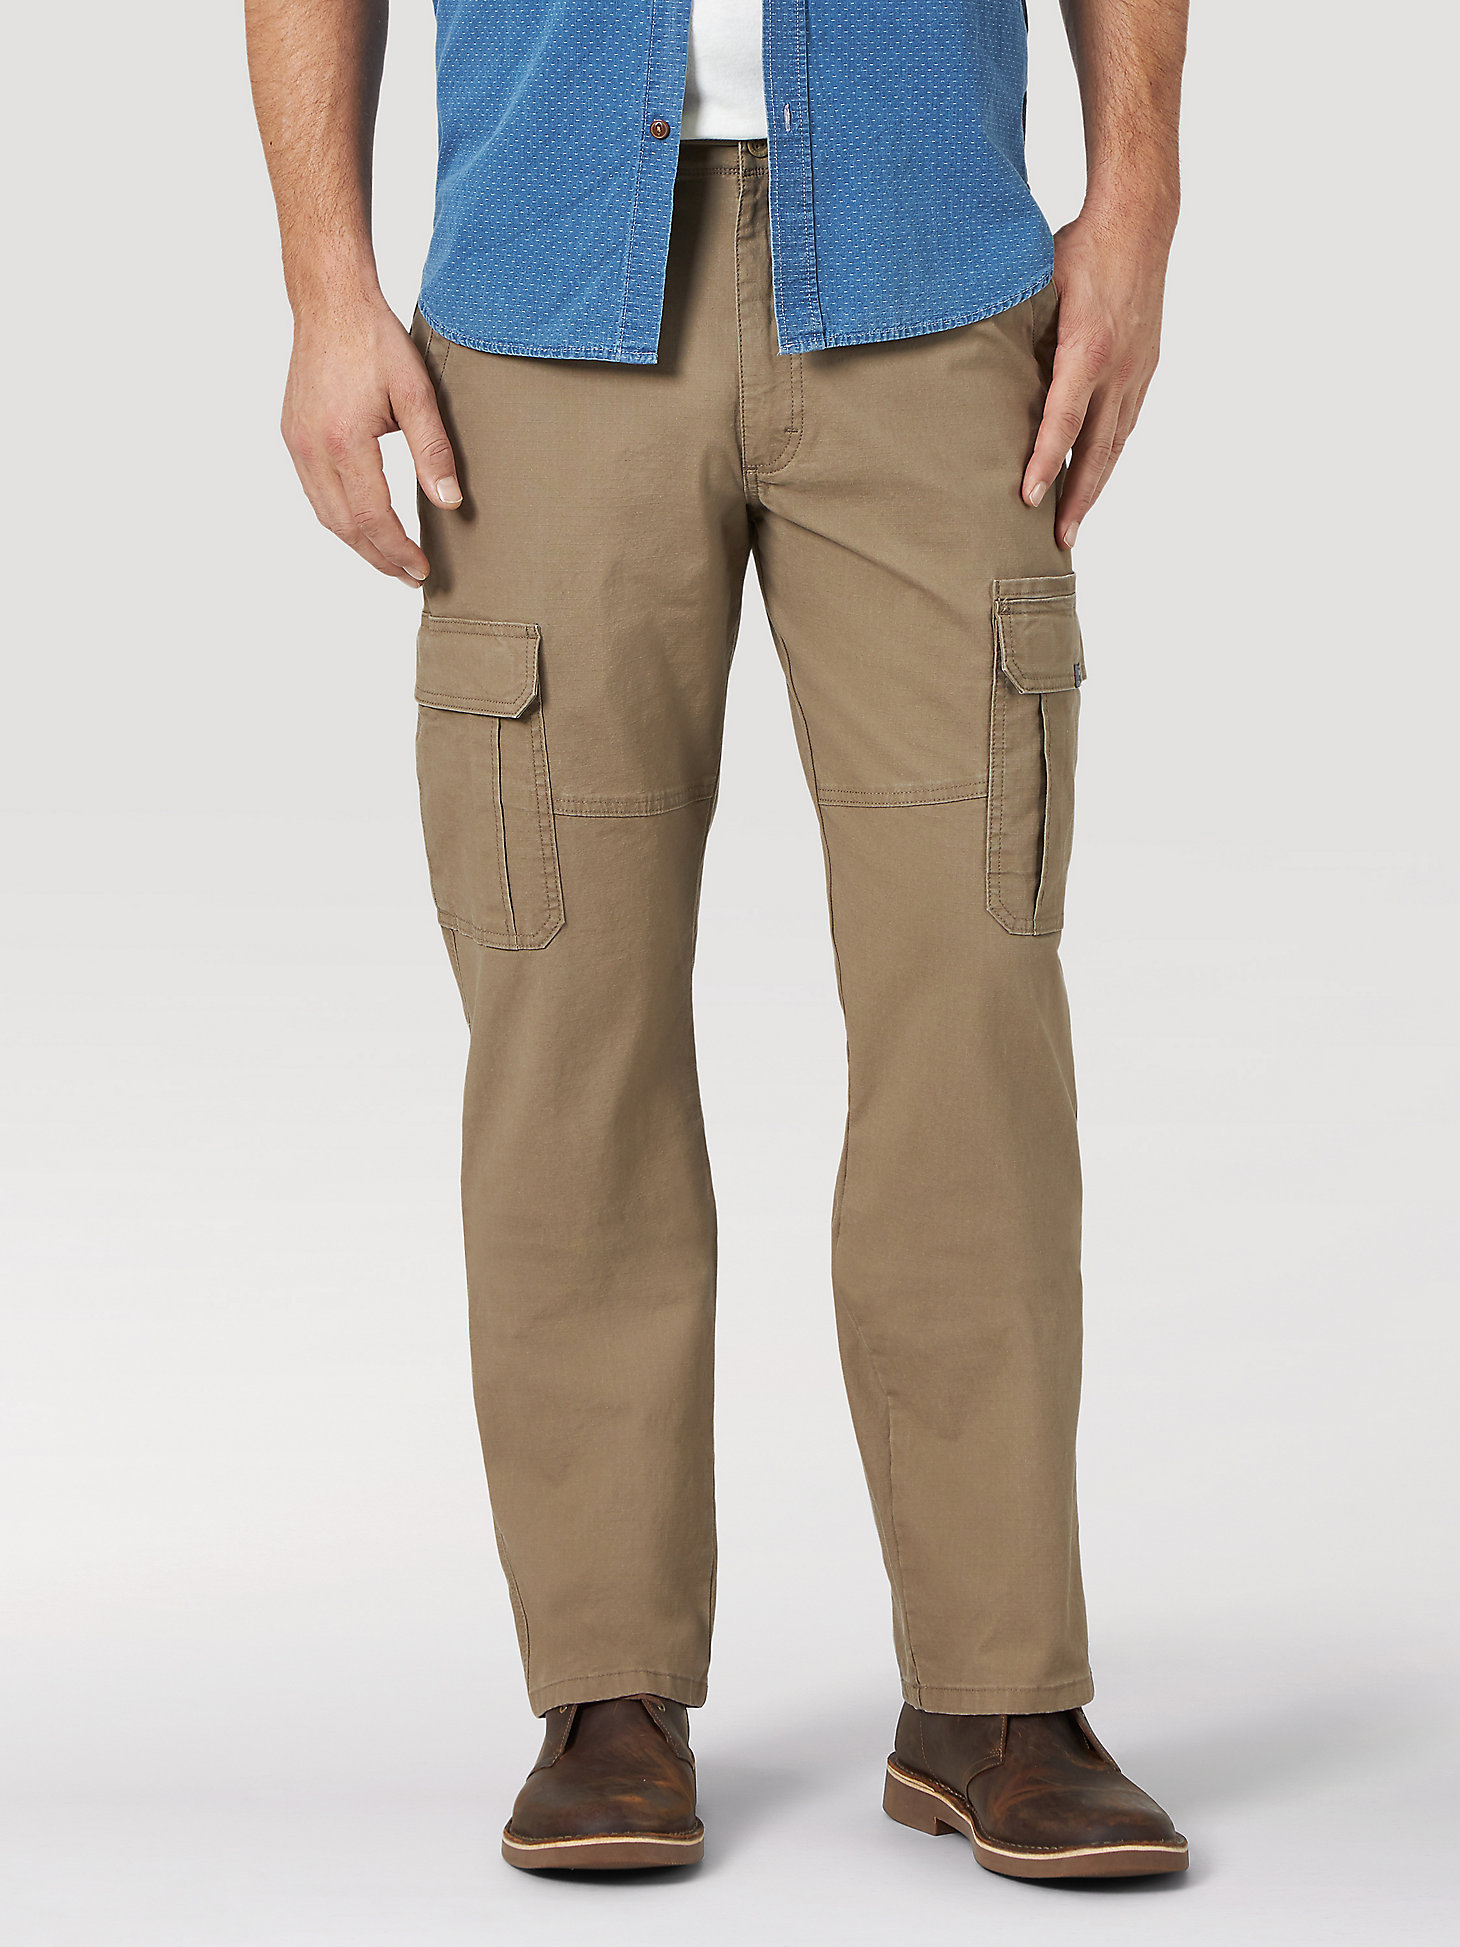 Wrangler® Men's Five Star Premium Relaxed Fit Flex Cargo Pant in Barley main view